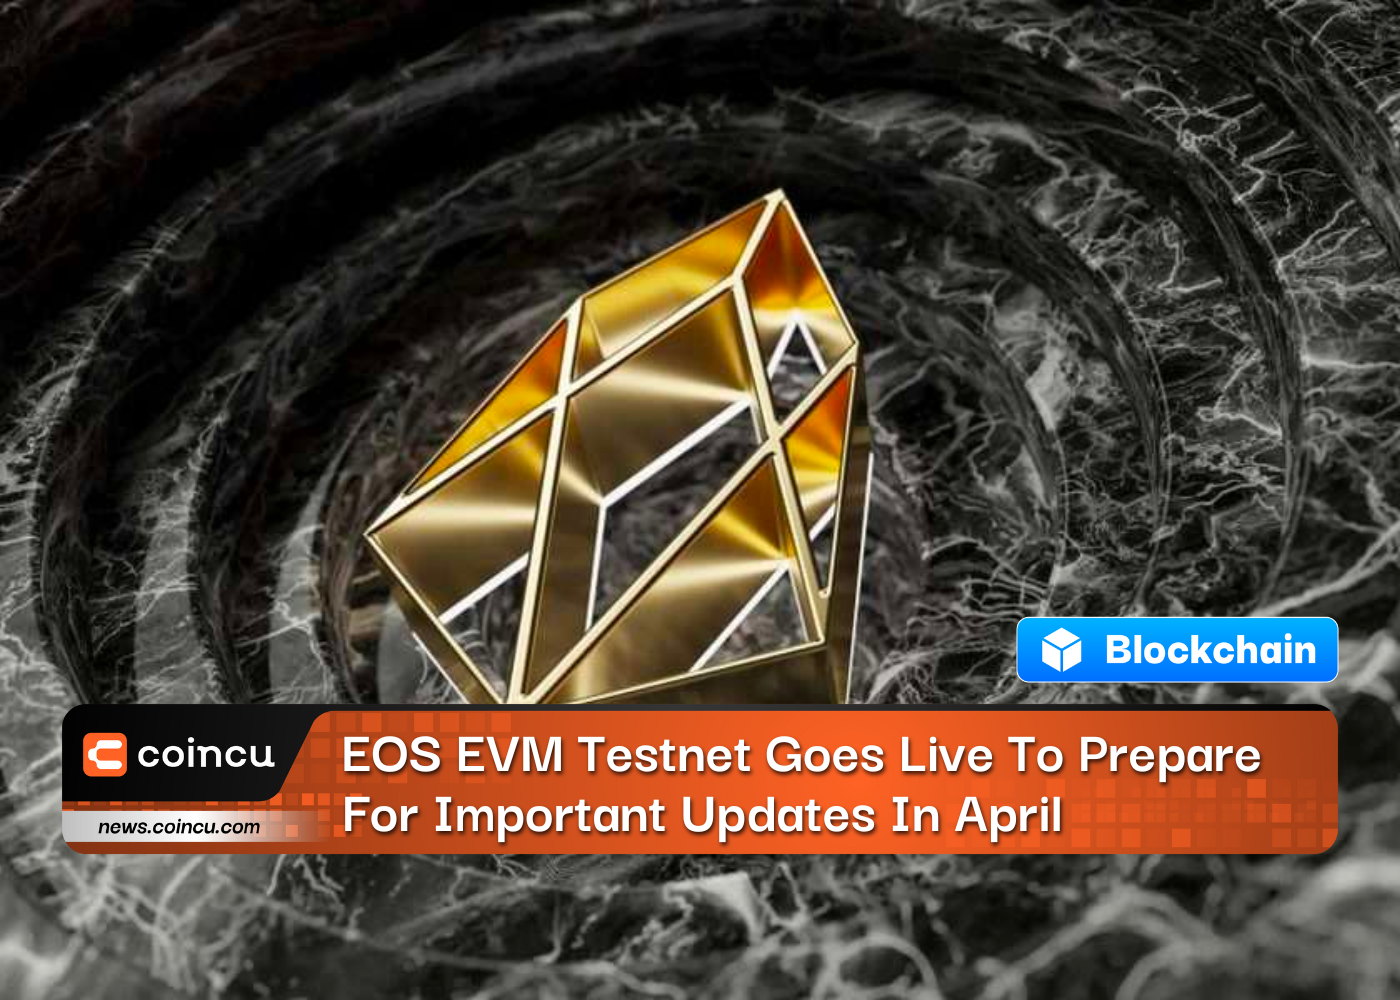 EOS EVM 테스트넷은 4월에 중요한 업데이트를 준비하기 위해 라이브로 진행됩니다.